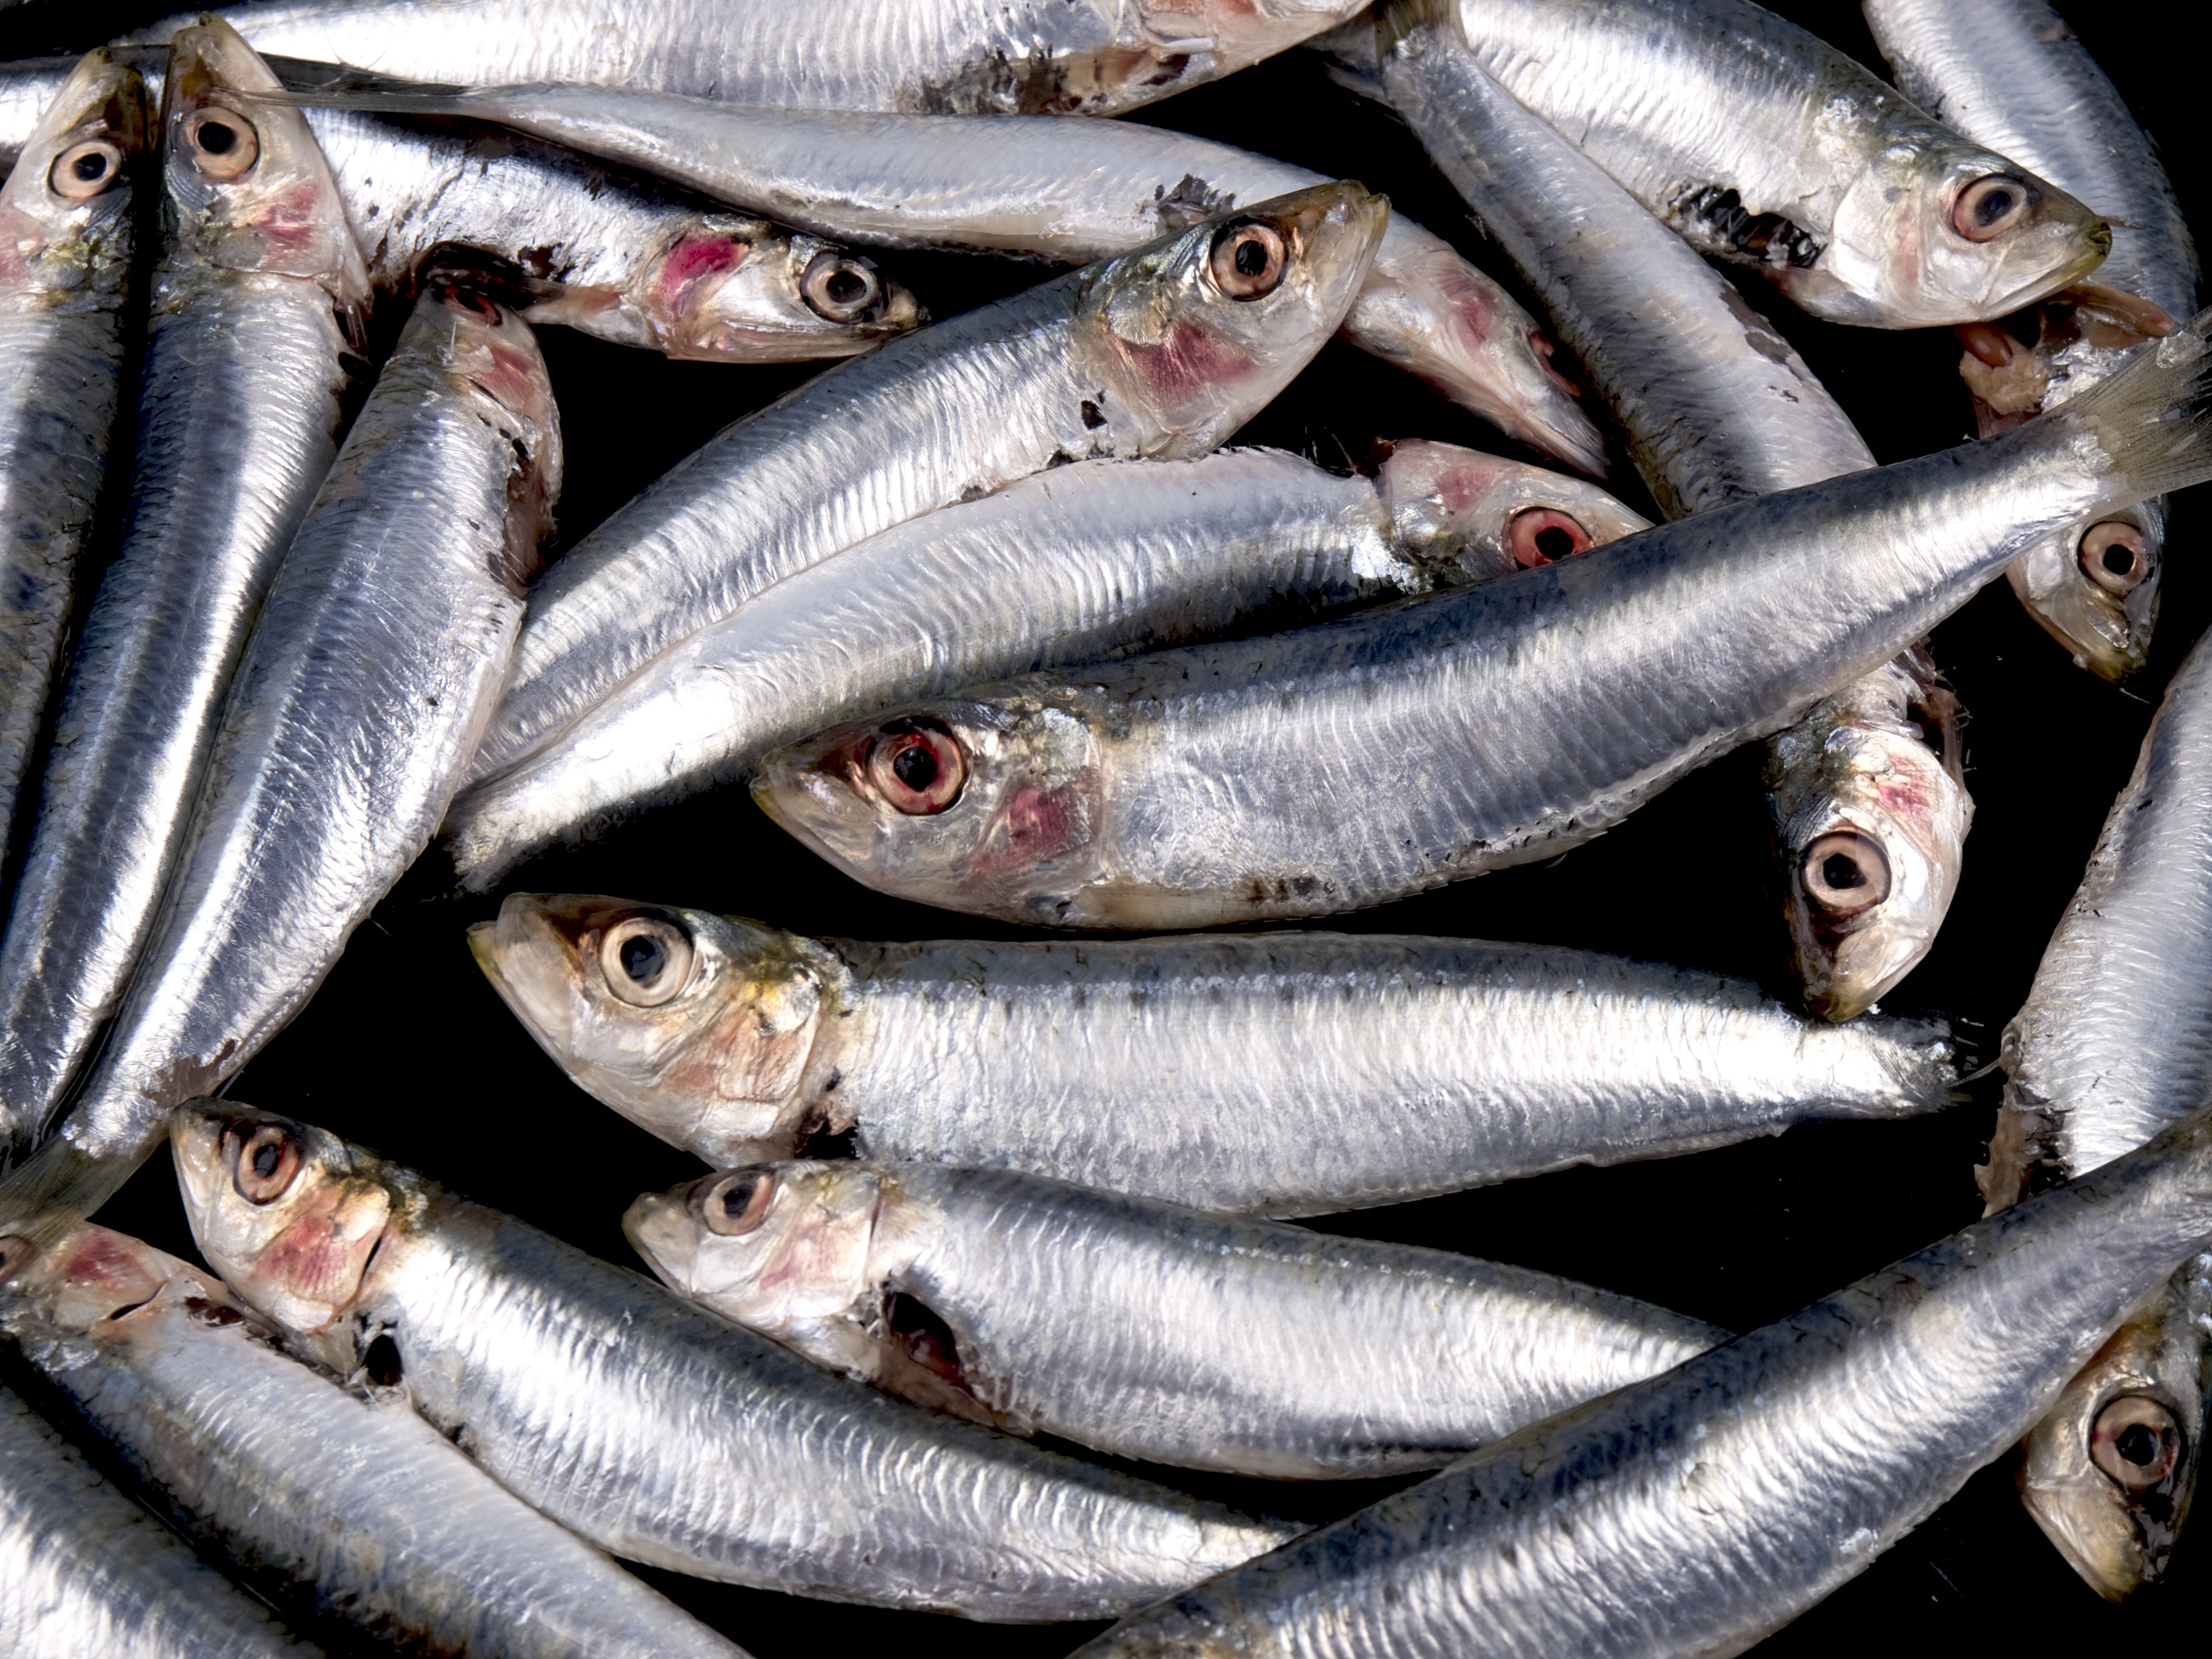 Diabete, mangiare pesce con omega 3 protegge da retinopatia